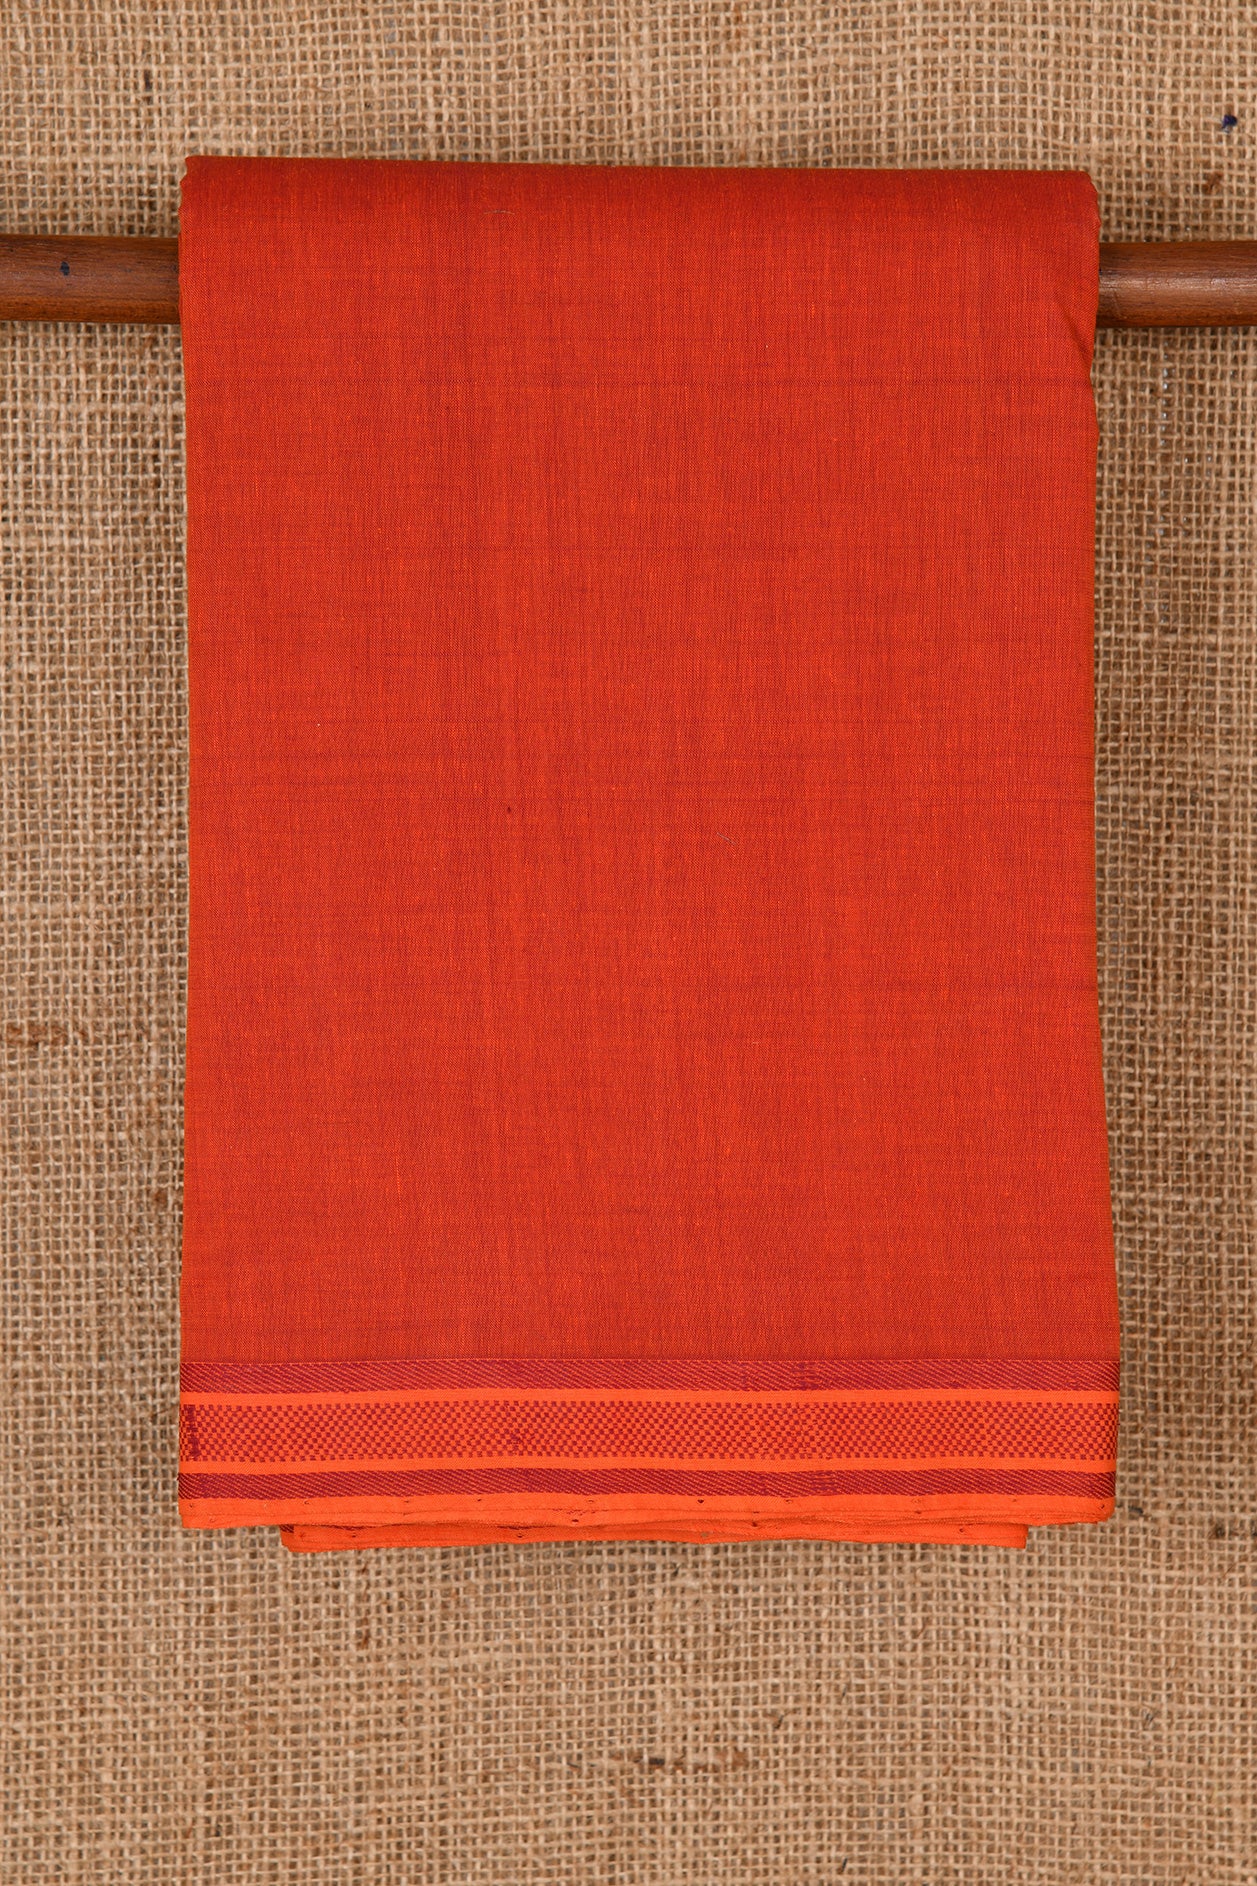 Small Border Scarlet Color Mangalagiri Cotton Saree